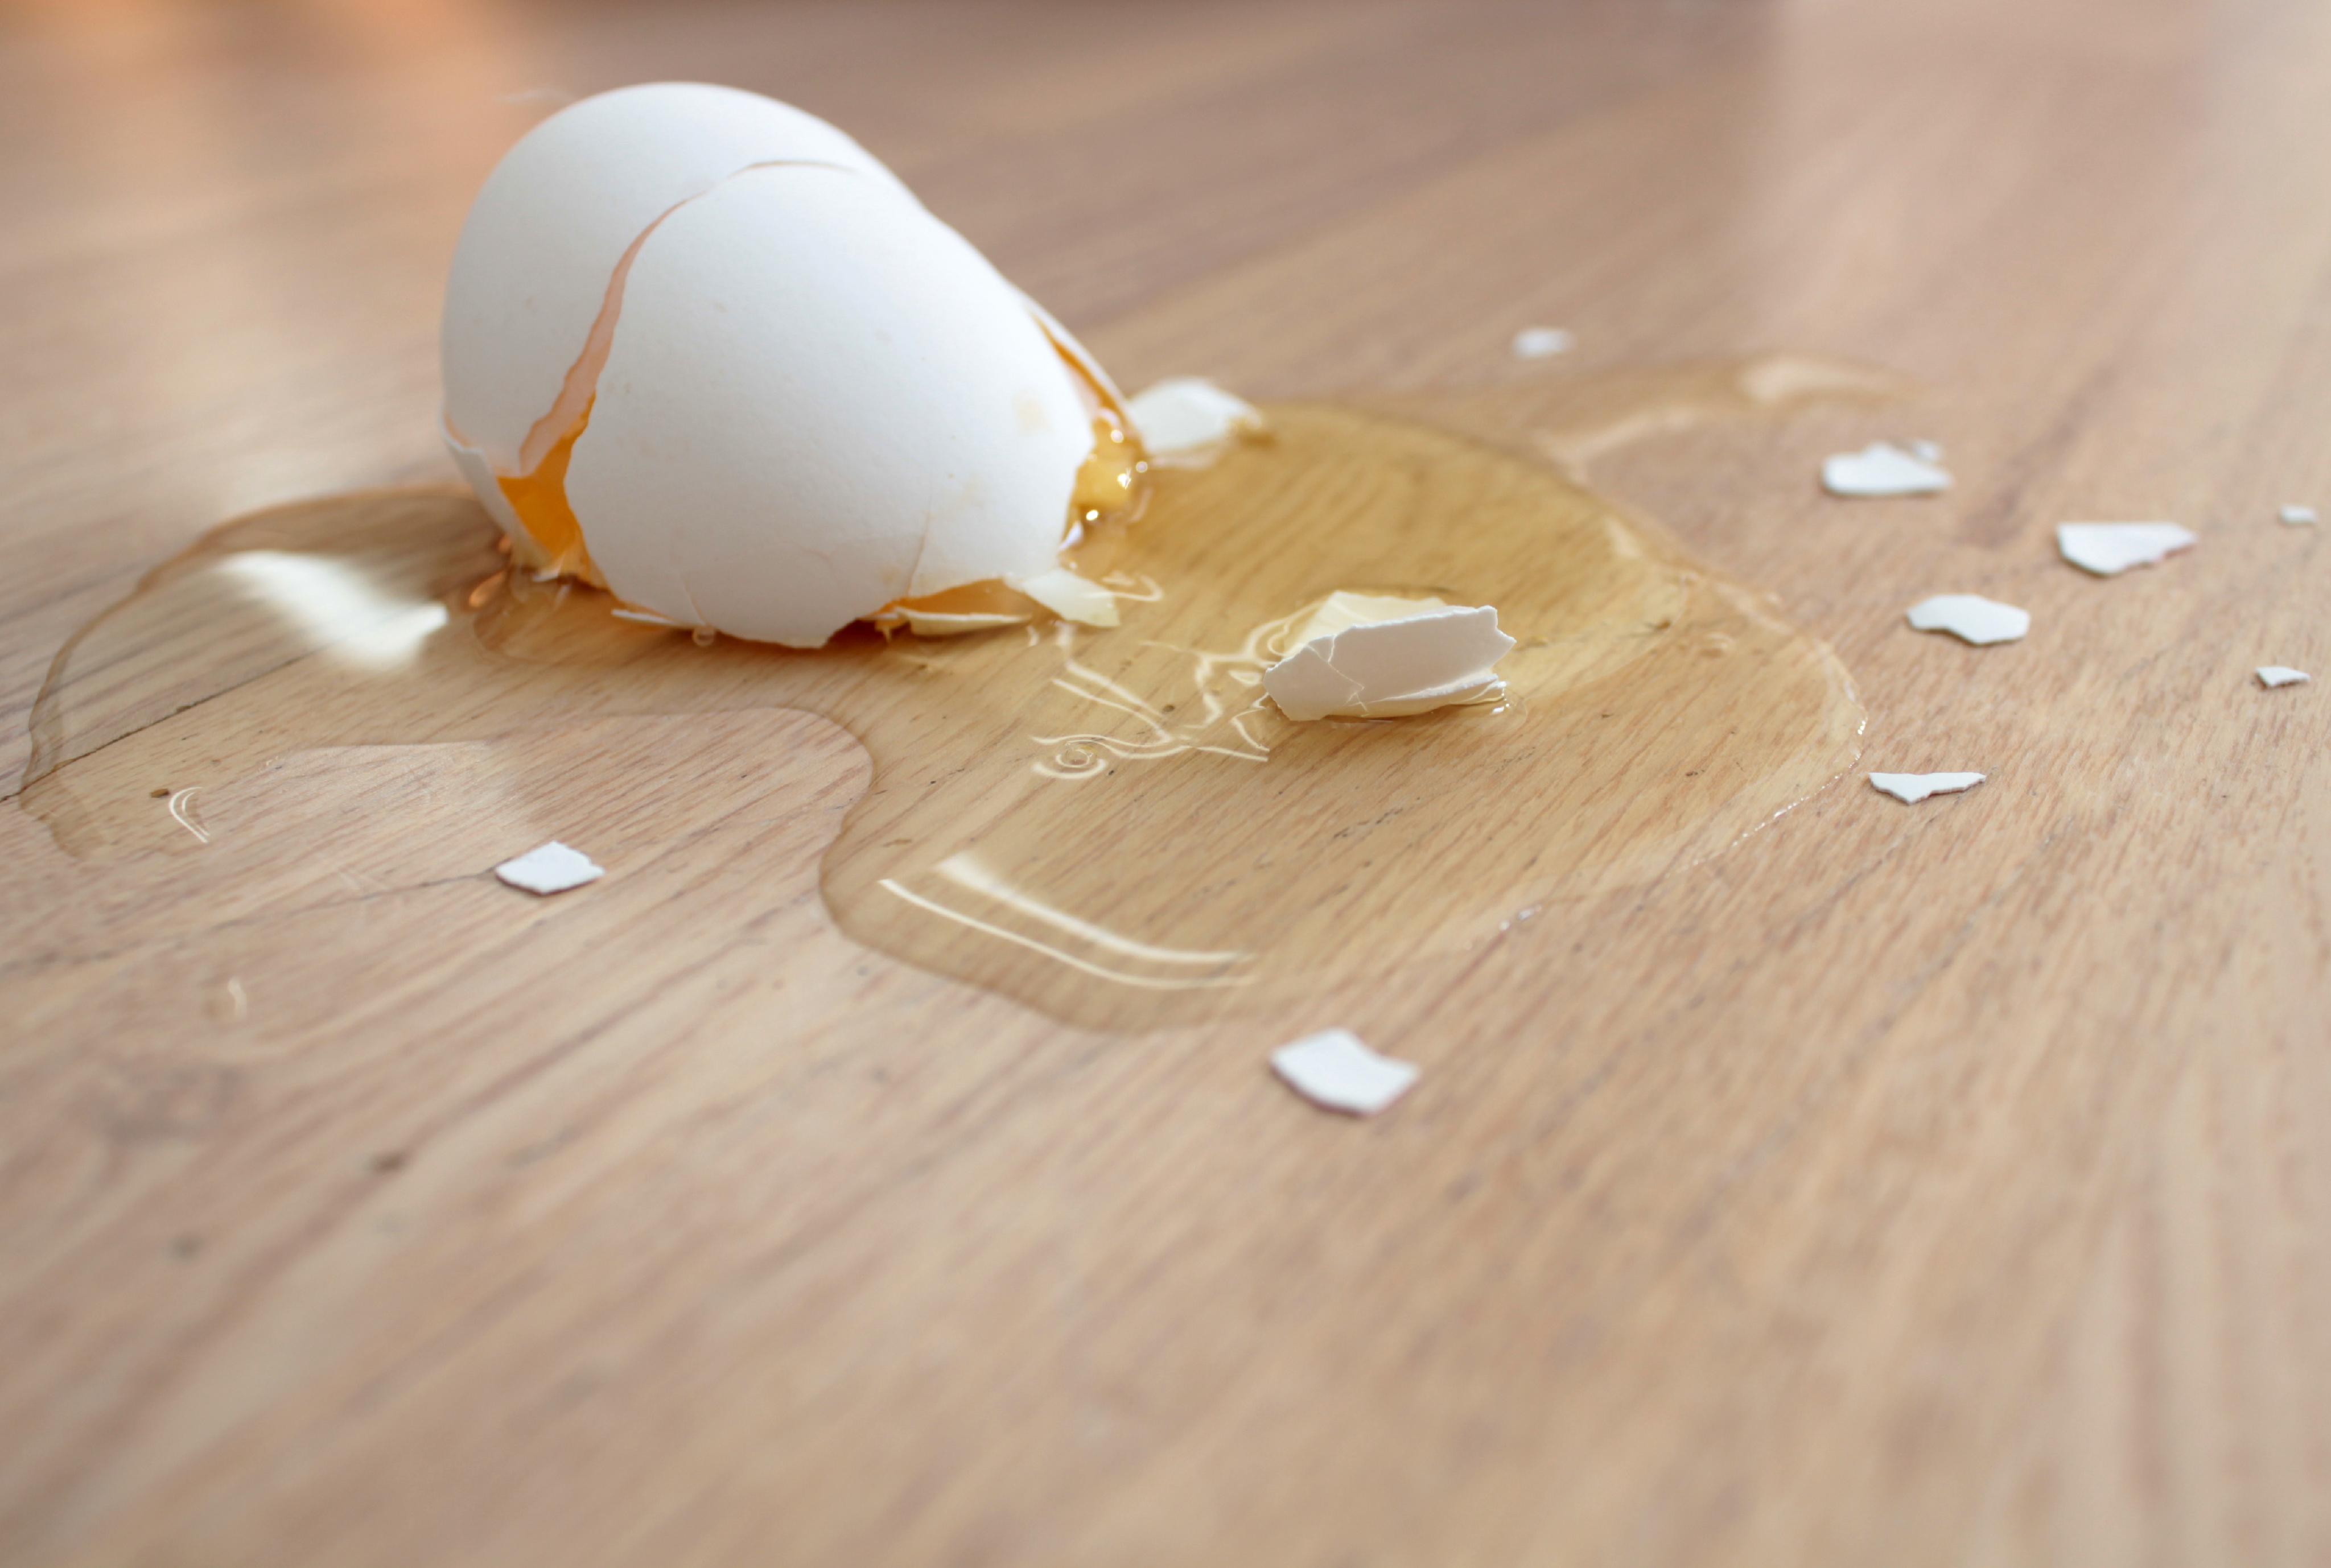 Разбитые яйца 2. Разбитое яйцо. Яйцо разбилось. Разбитые яйца. Разбитое куриное яйцо.